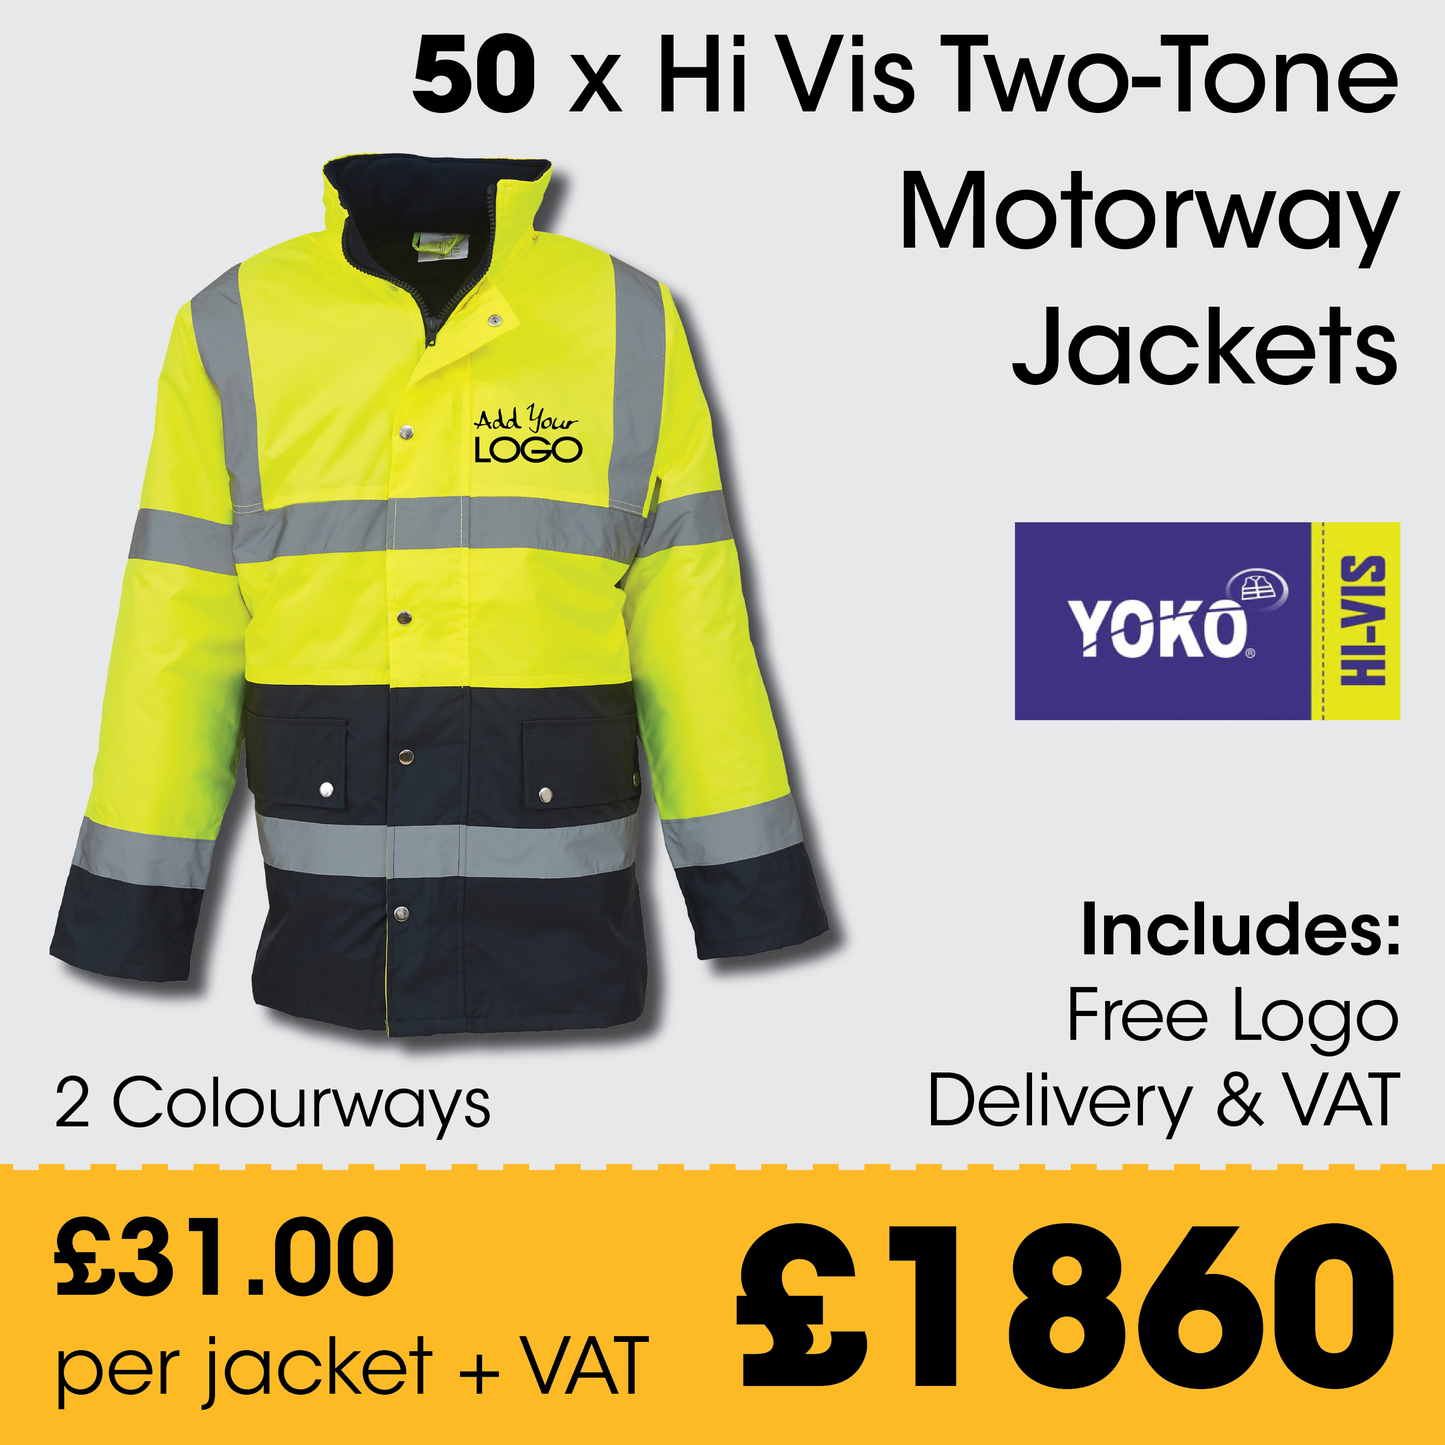 50 x YOKO 2 Tone Motorway Jacket + FREE Print & Delivery